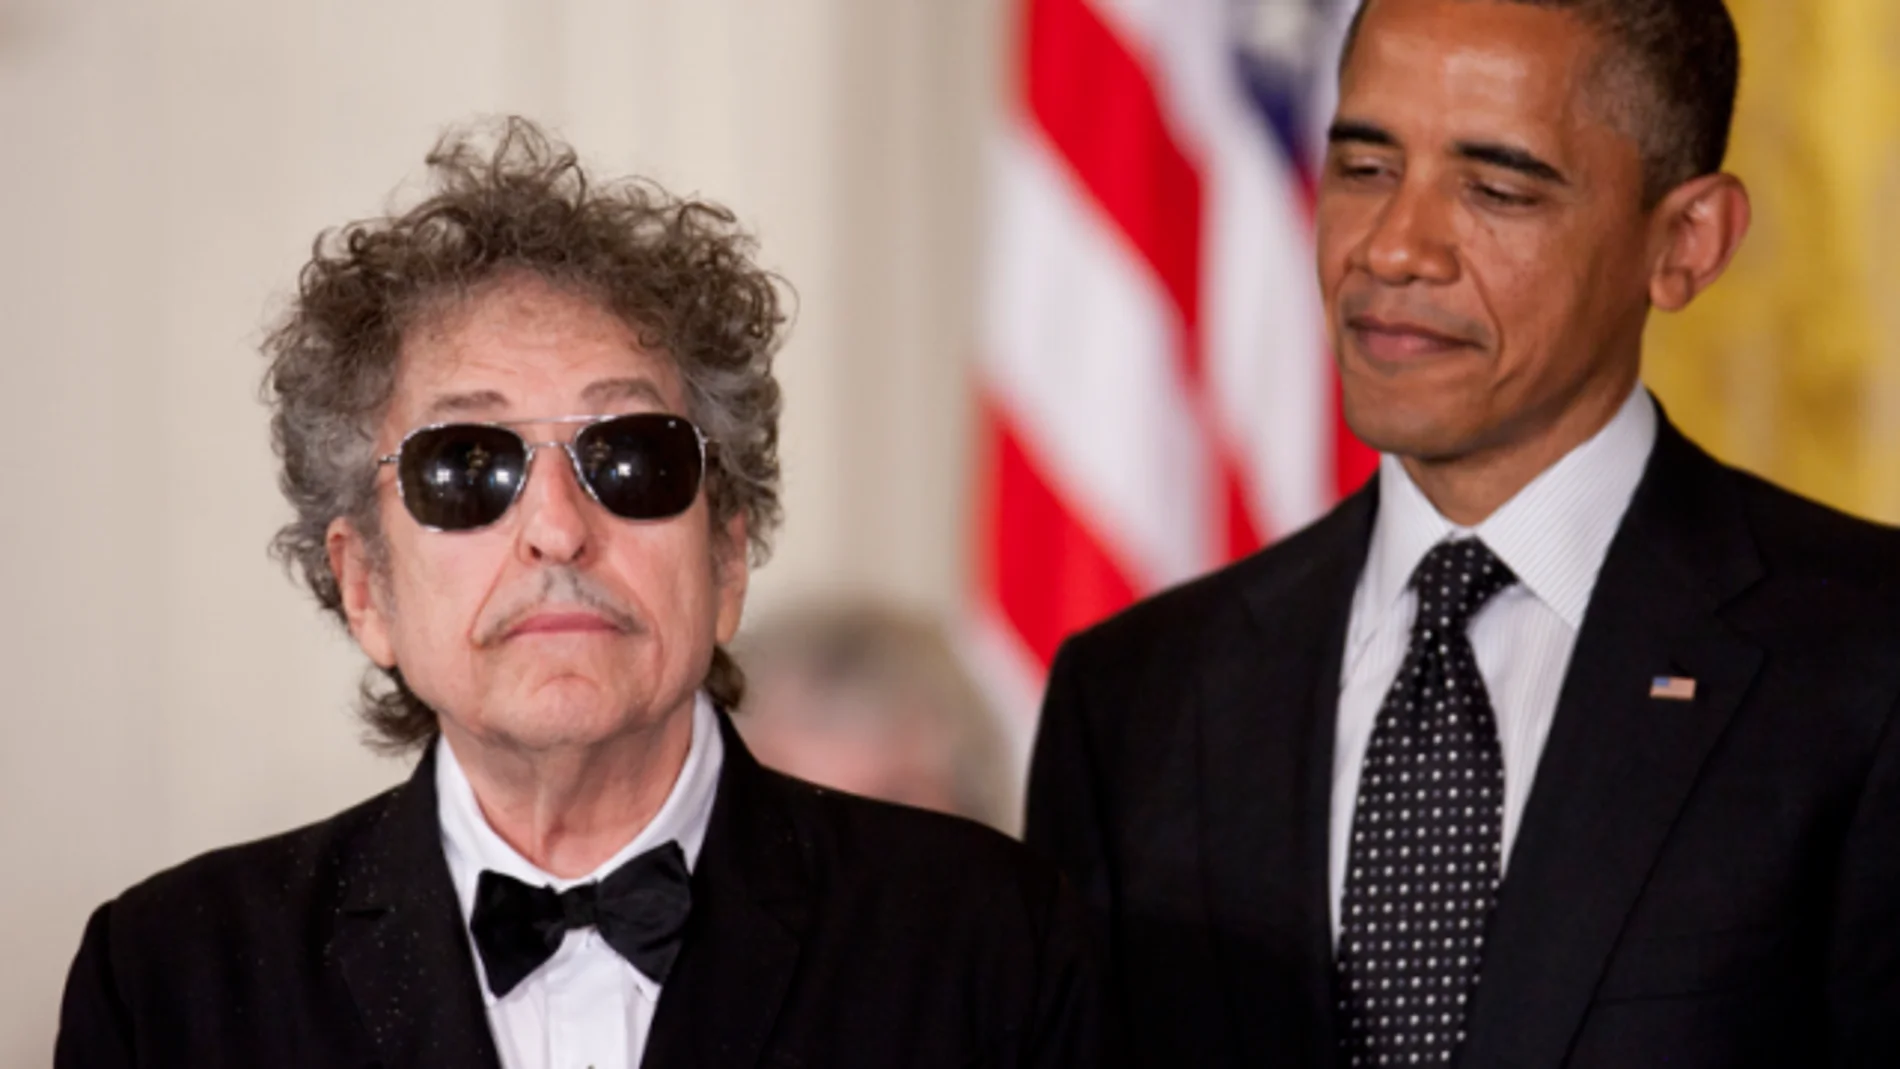 Bob Dylan y Barack Obama